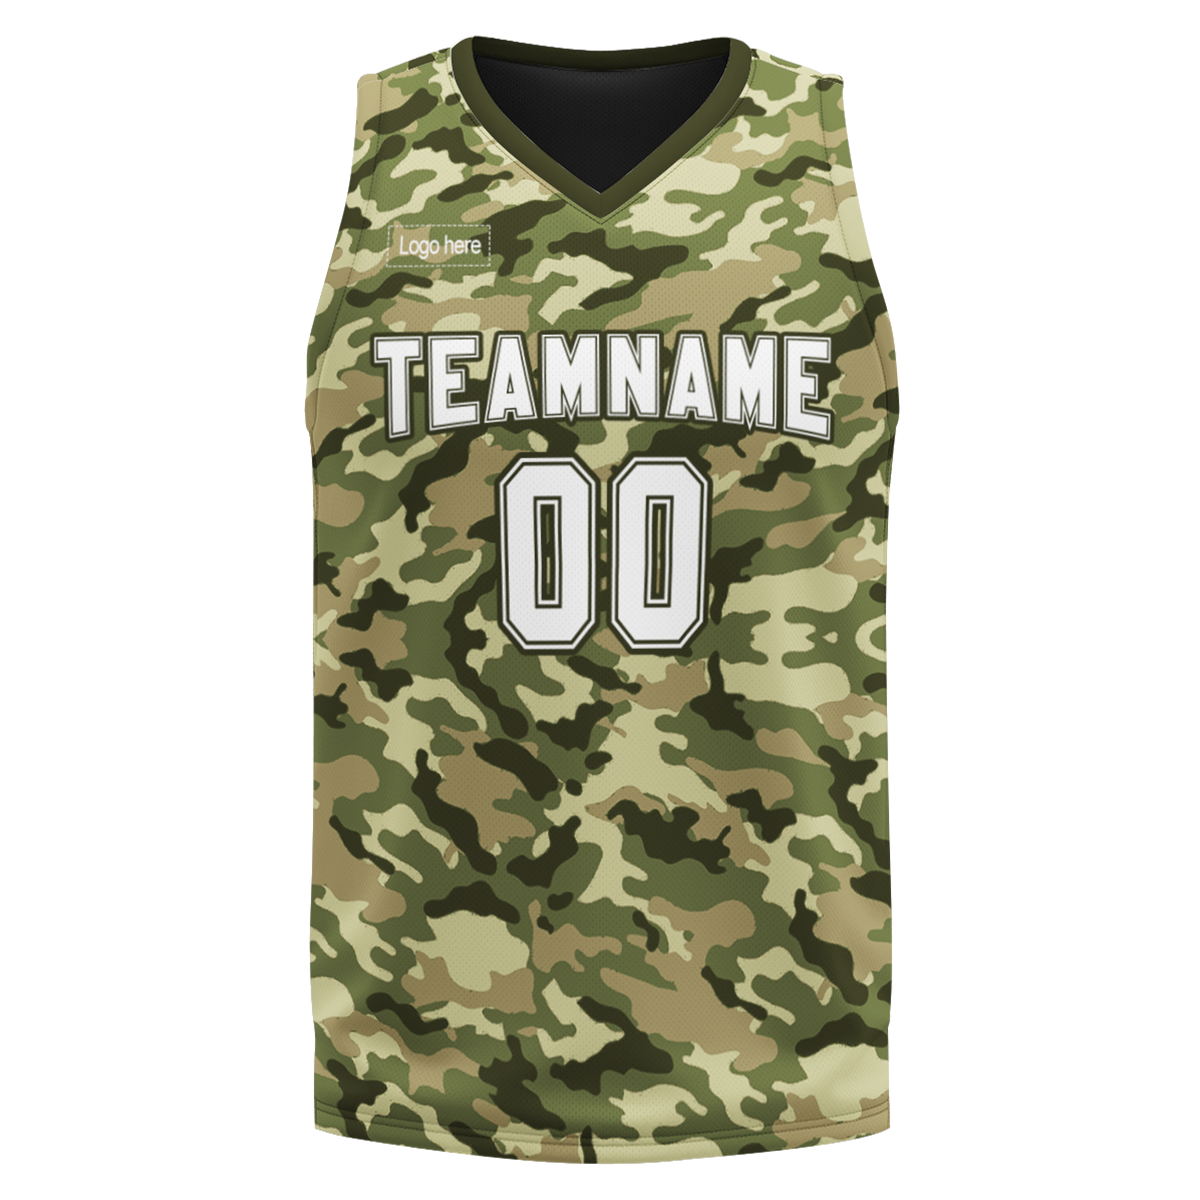 custom-your-own-team-made-basketball-jerseys-men-blank-sports-basketball-shorts-printed-basketball-wear-uniforms-at-cj-pod-4